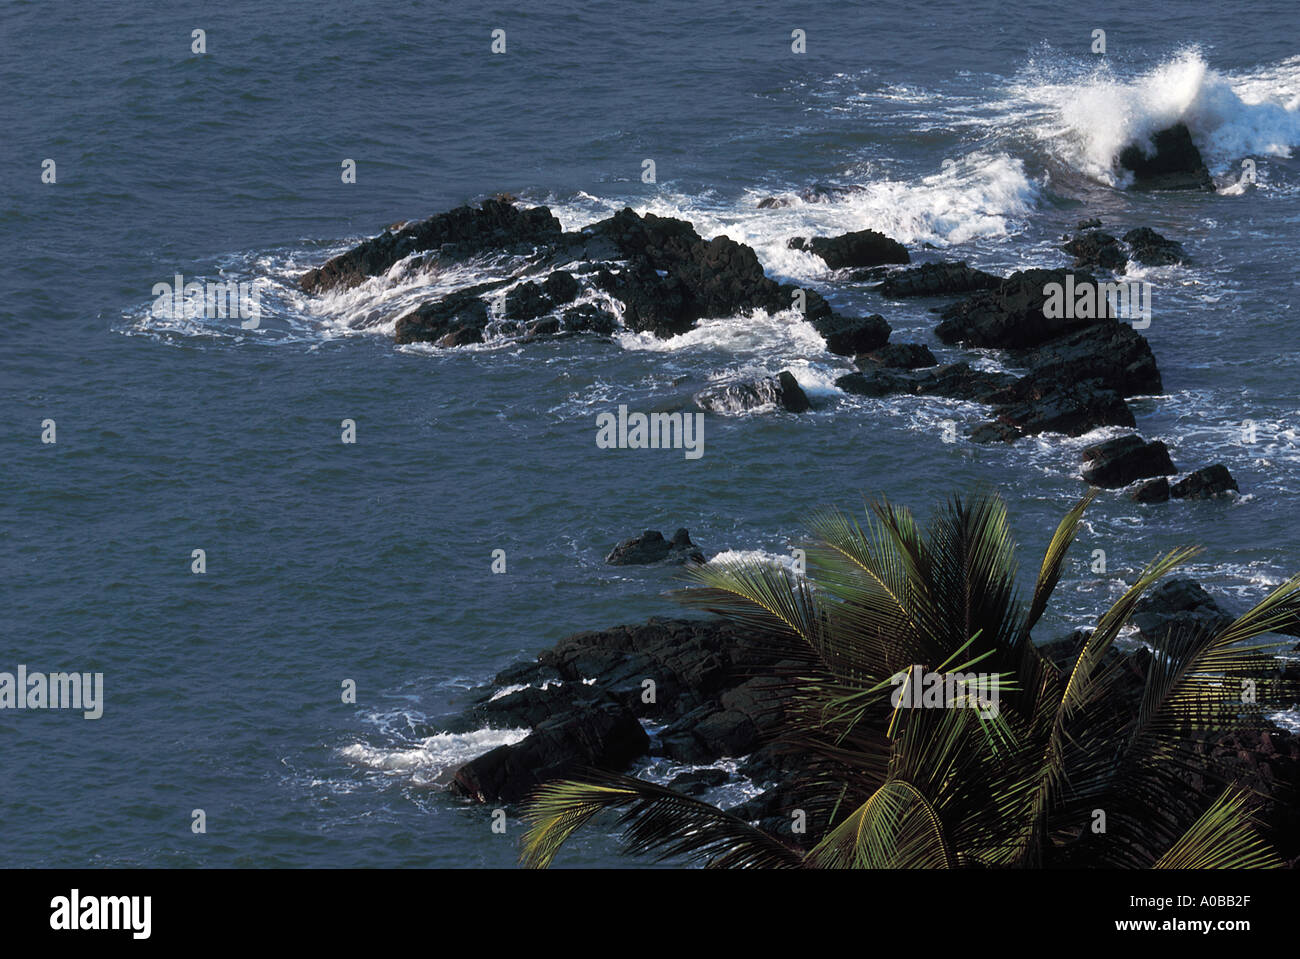 A view from Sea , Cabo de Rama, Dona Paula, Goa Stock Photo